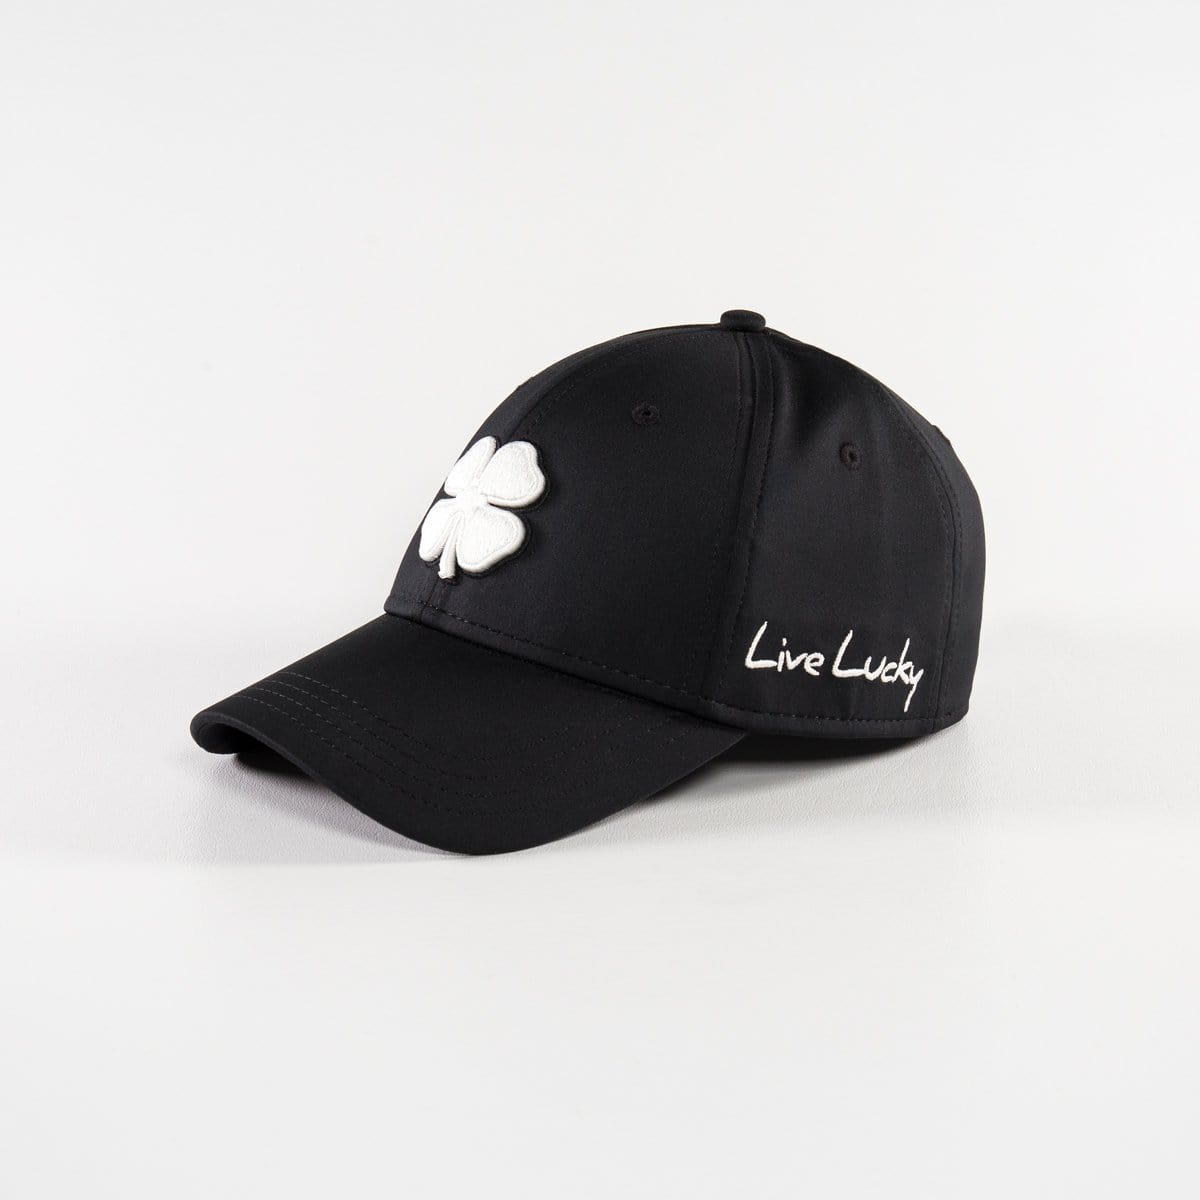 Gorra Black Clover  Live Lucky  PREMIUM CLOVER 41 Hat Cap